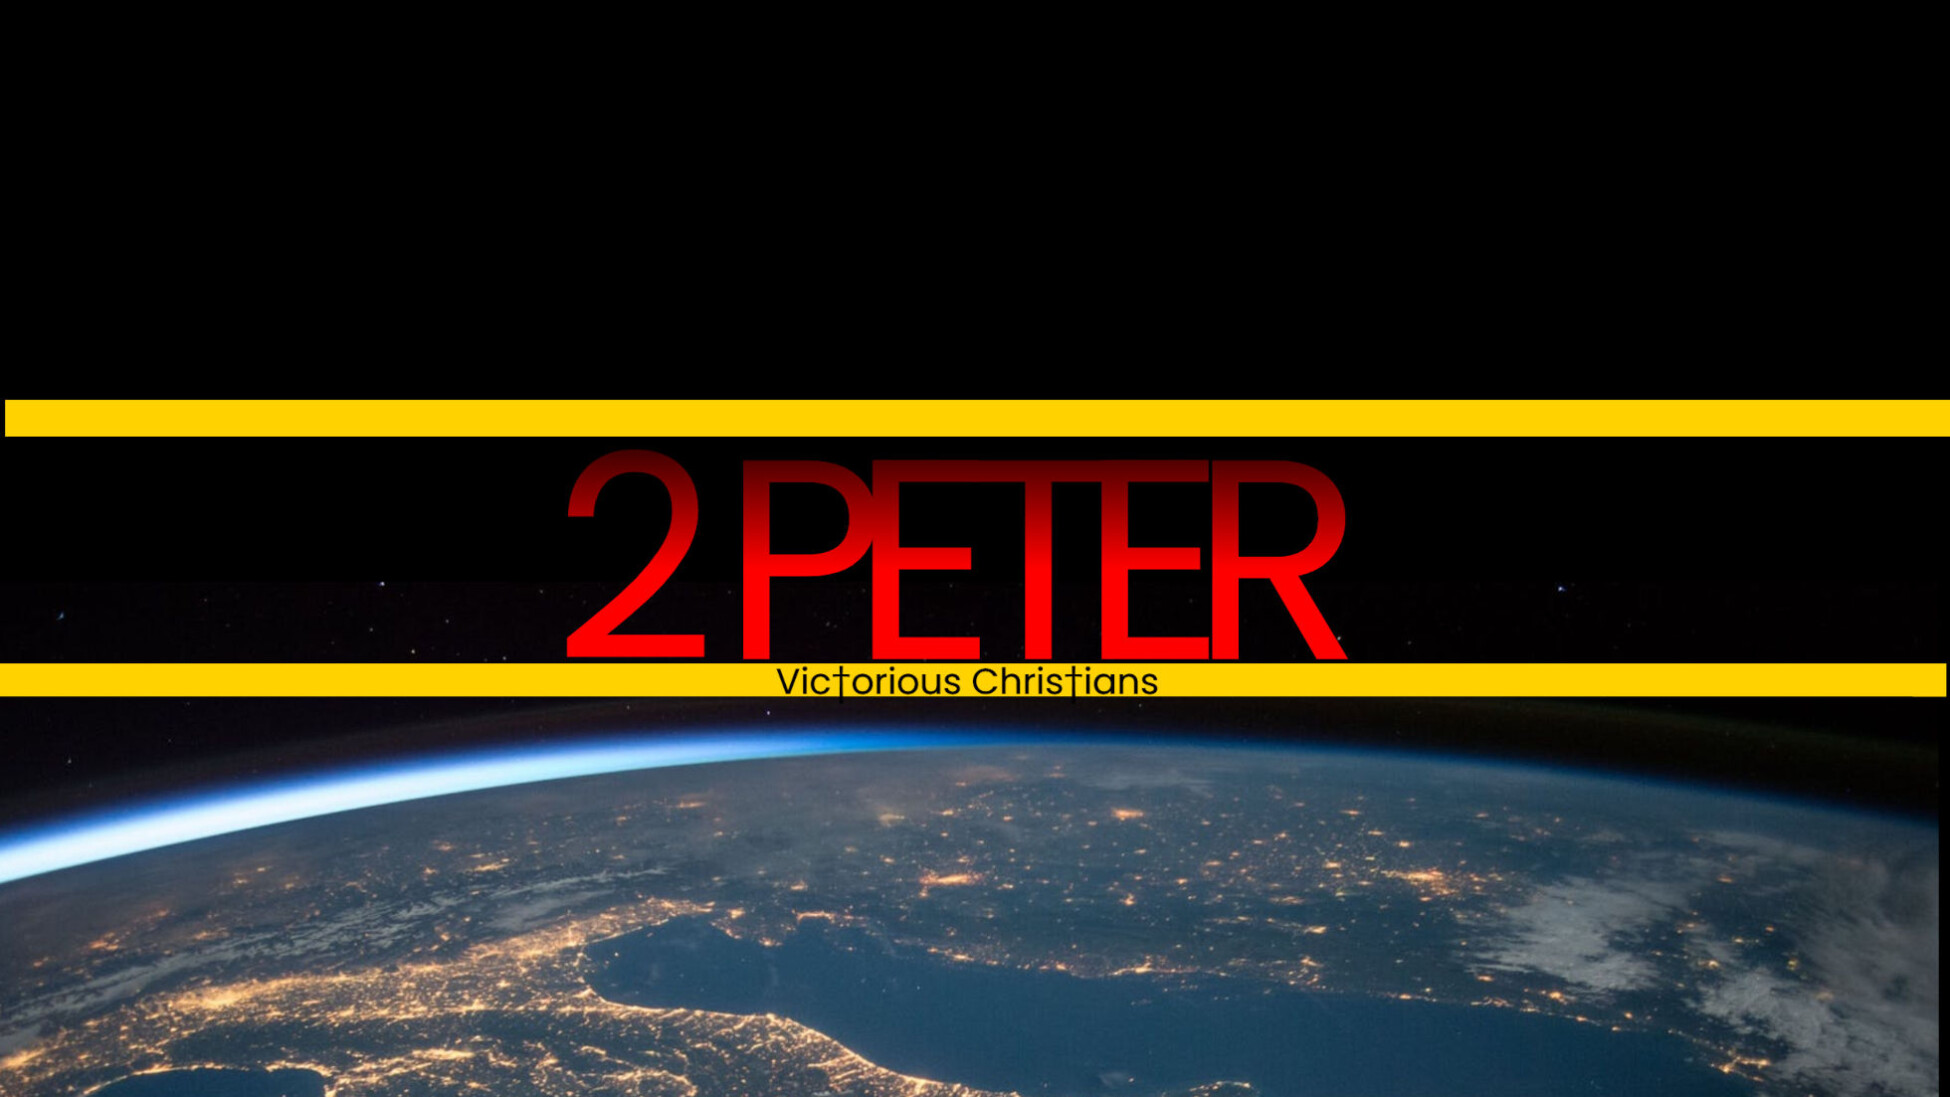 Book of 2 Peter